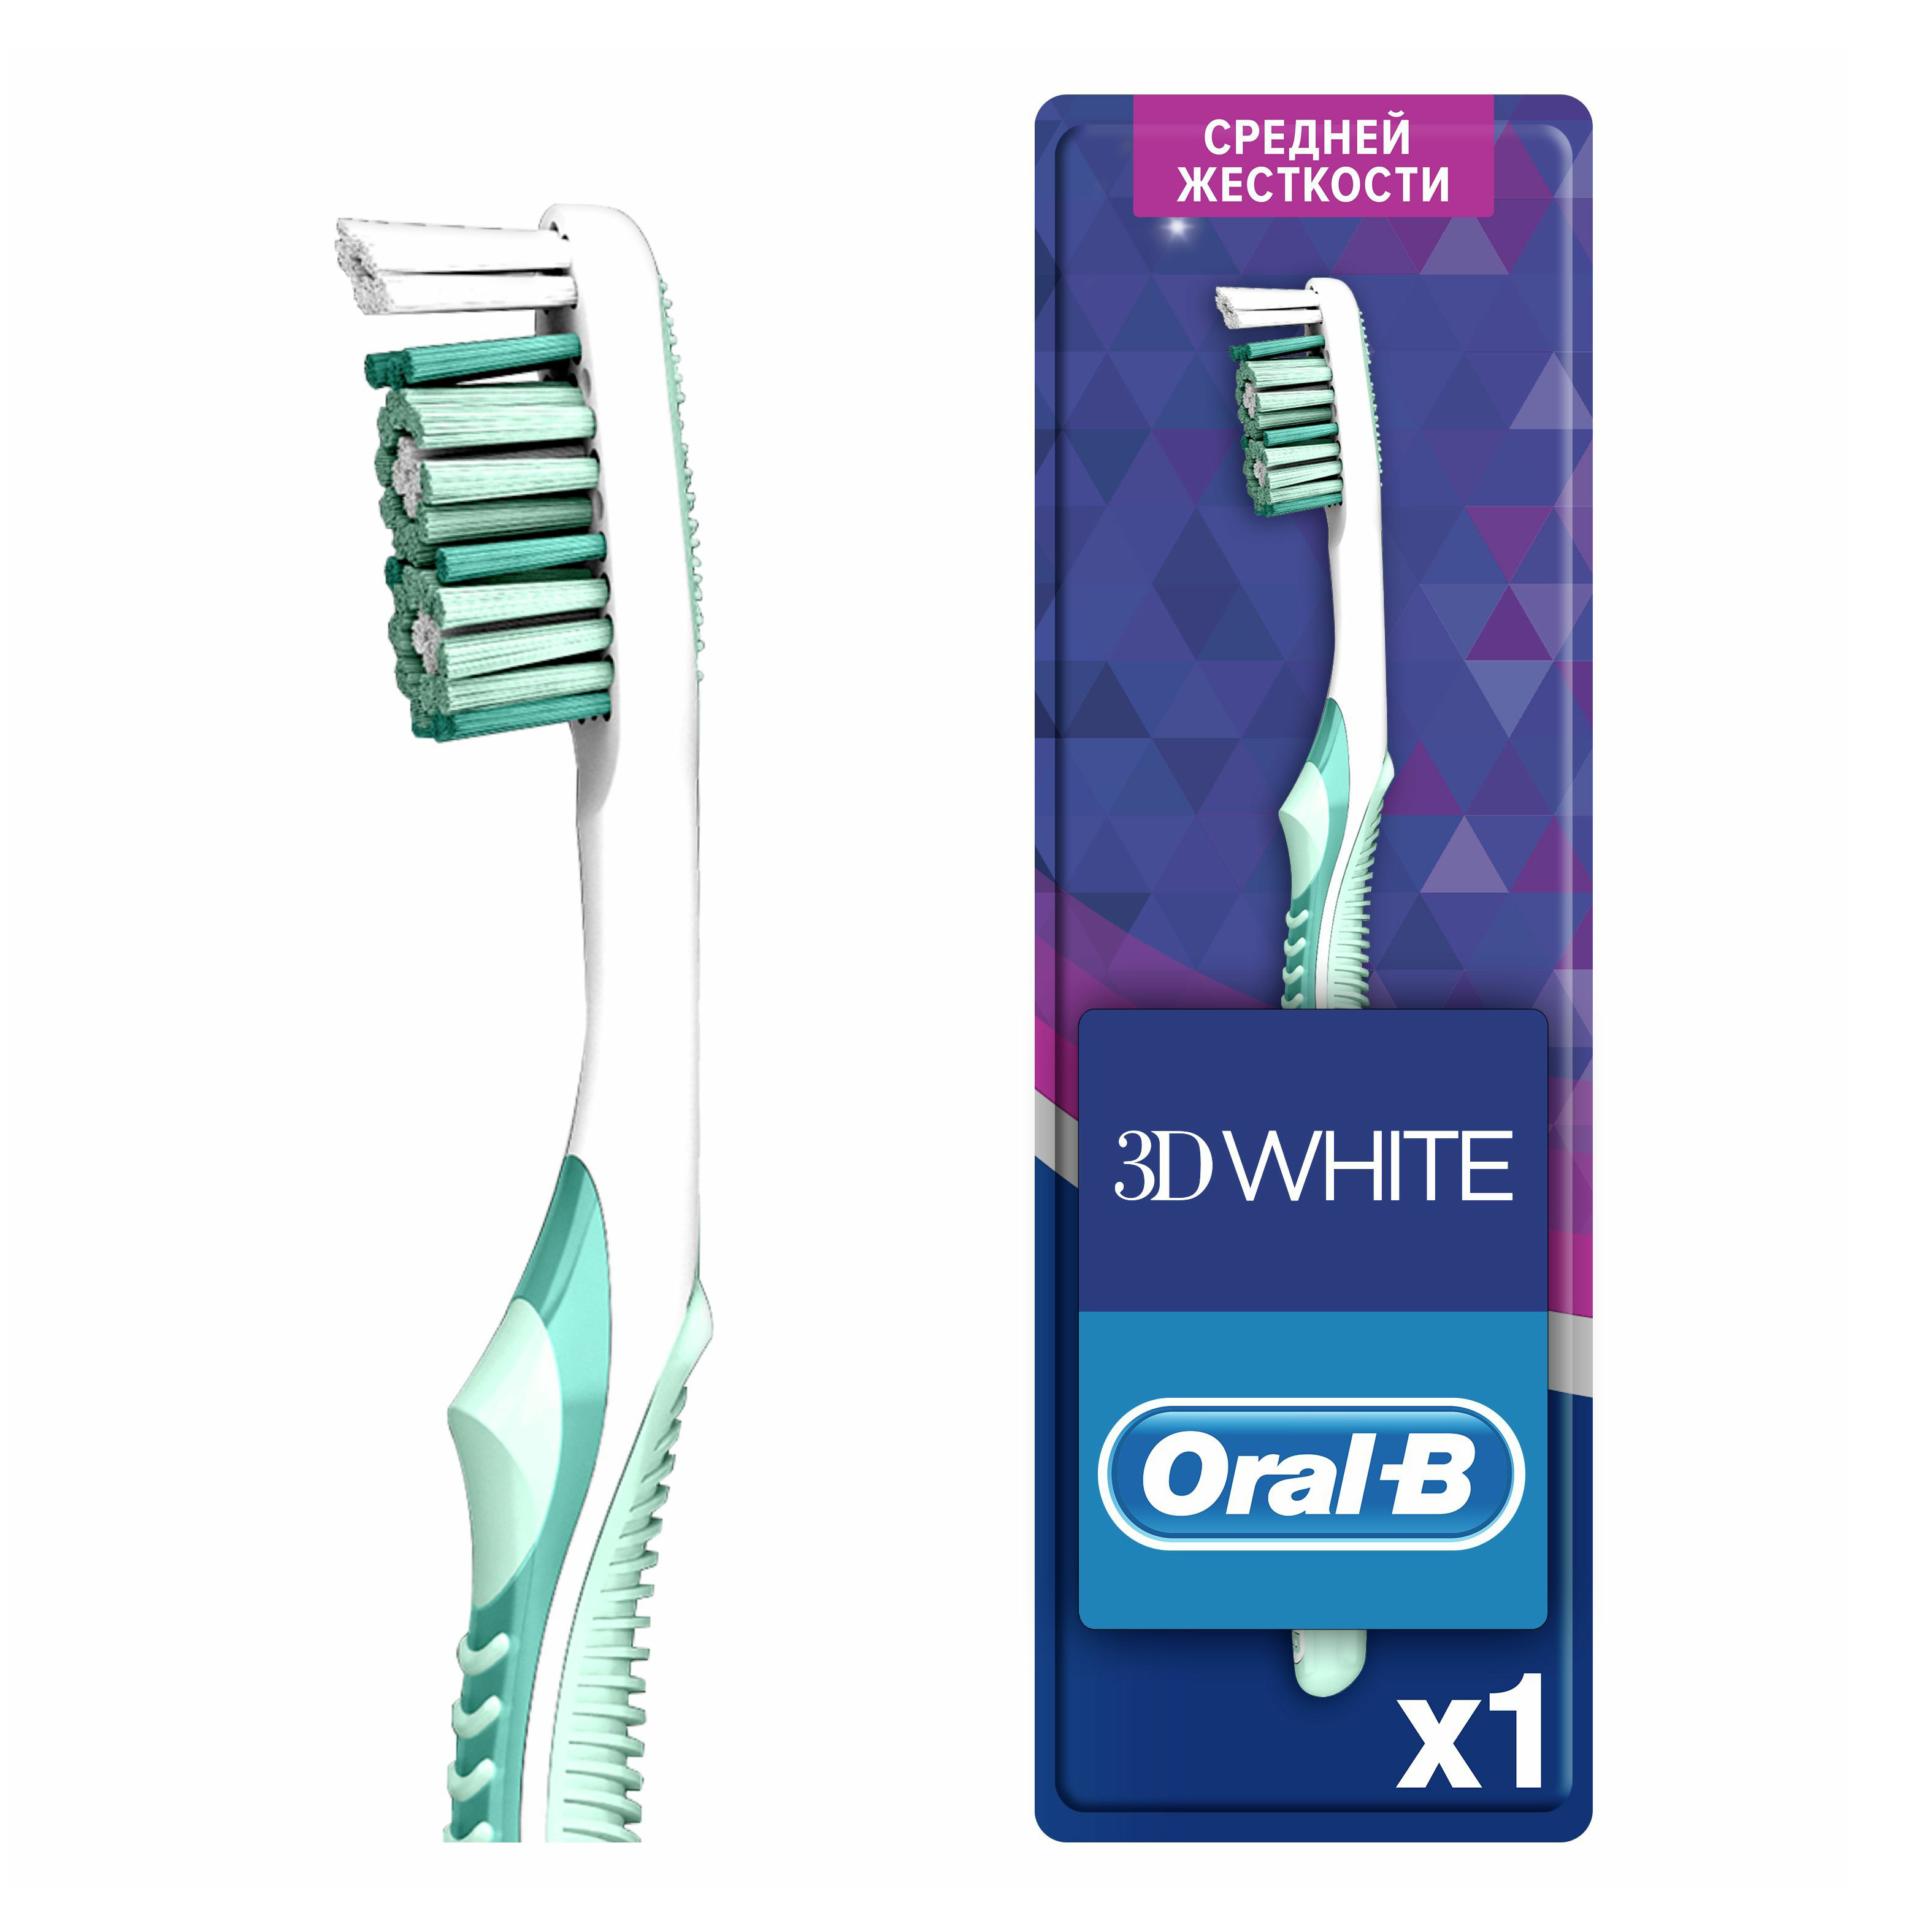 Зубная щетка Oral-B 3D White Whitening средней жесткости oral b про 1 щетка зубная электрическая